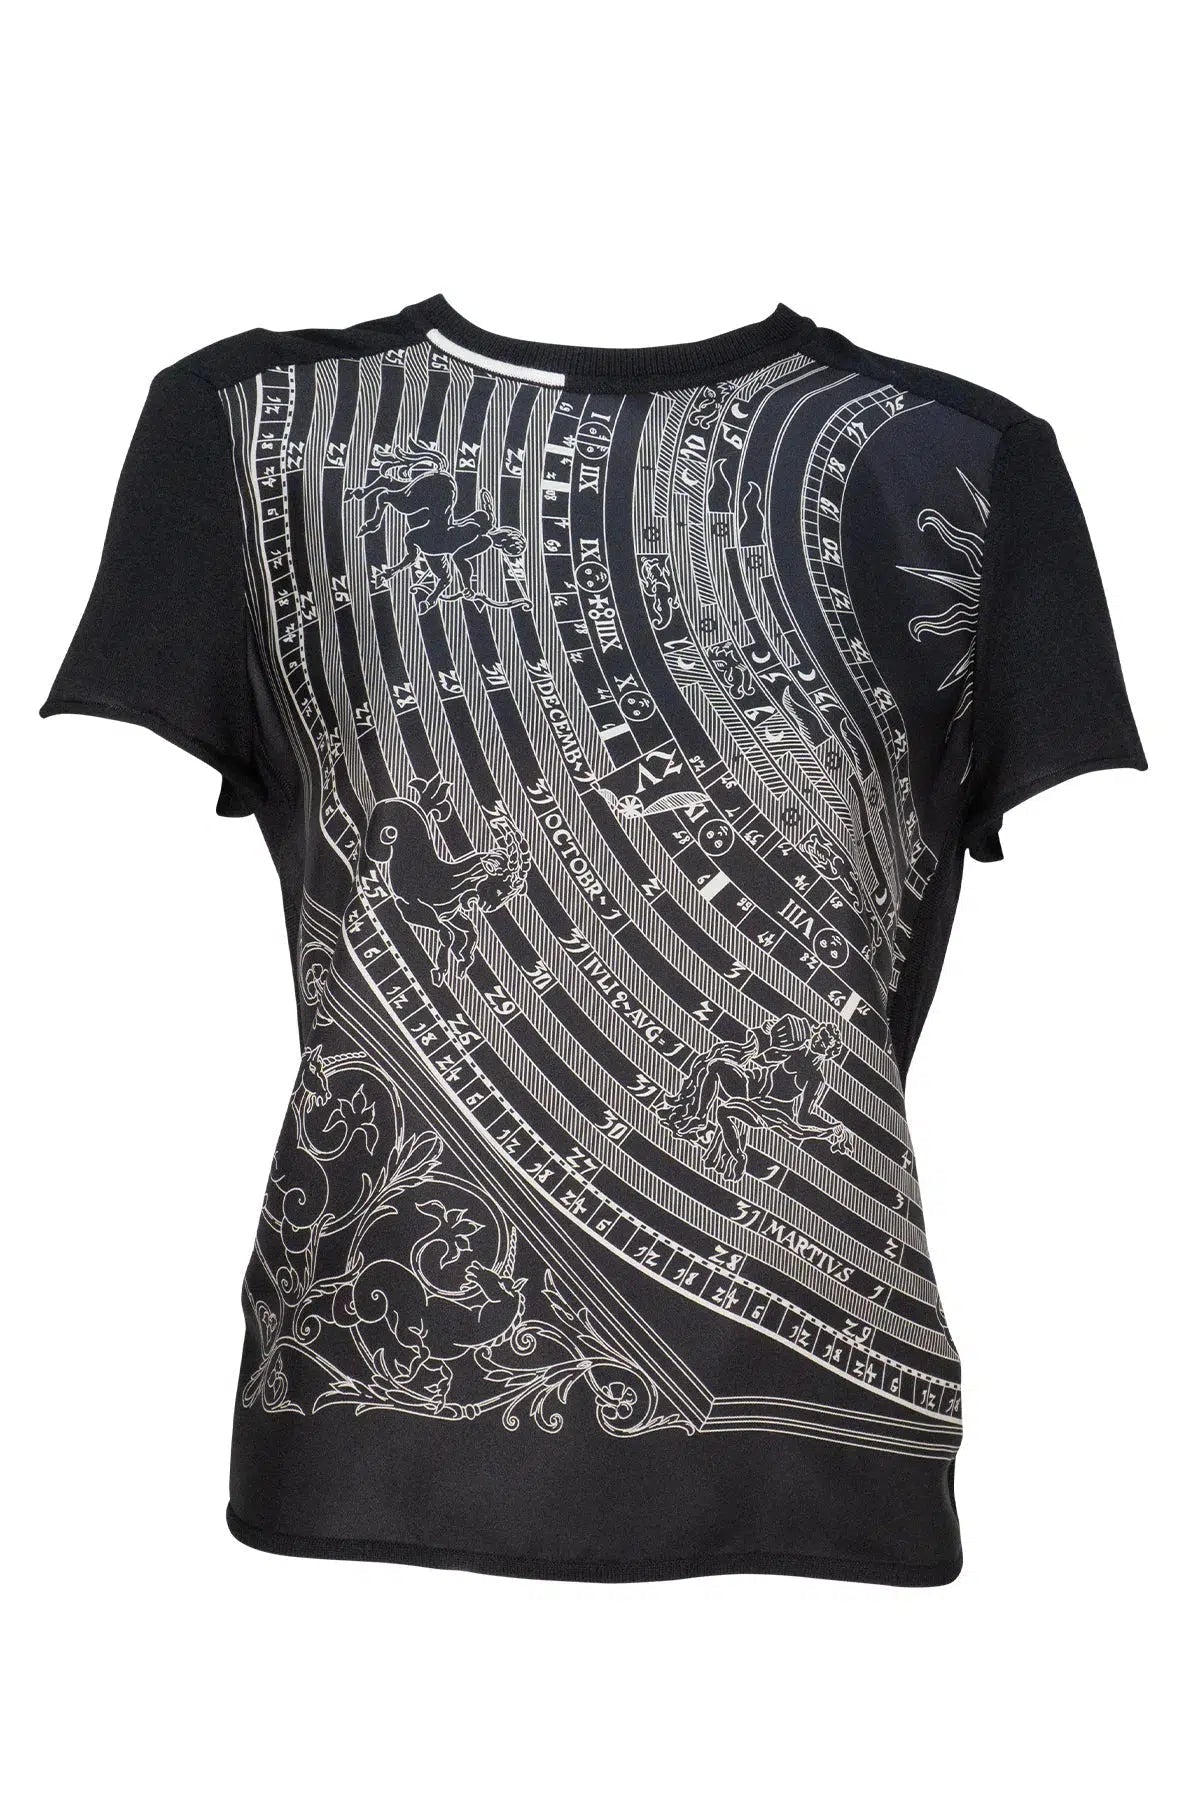 Hermès Astrology Remix Silk Panel Knit Shirt NWT Size 38/M - Foxy Couture Carmel